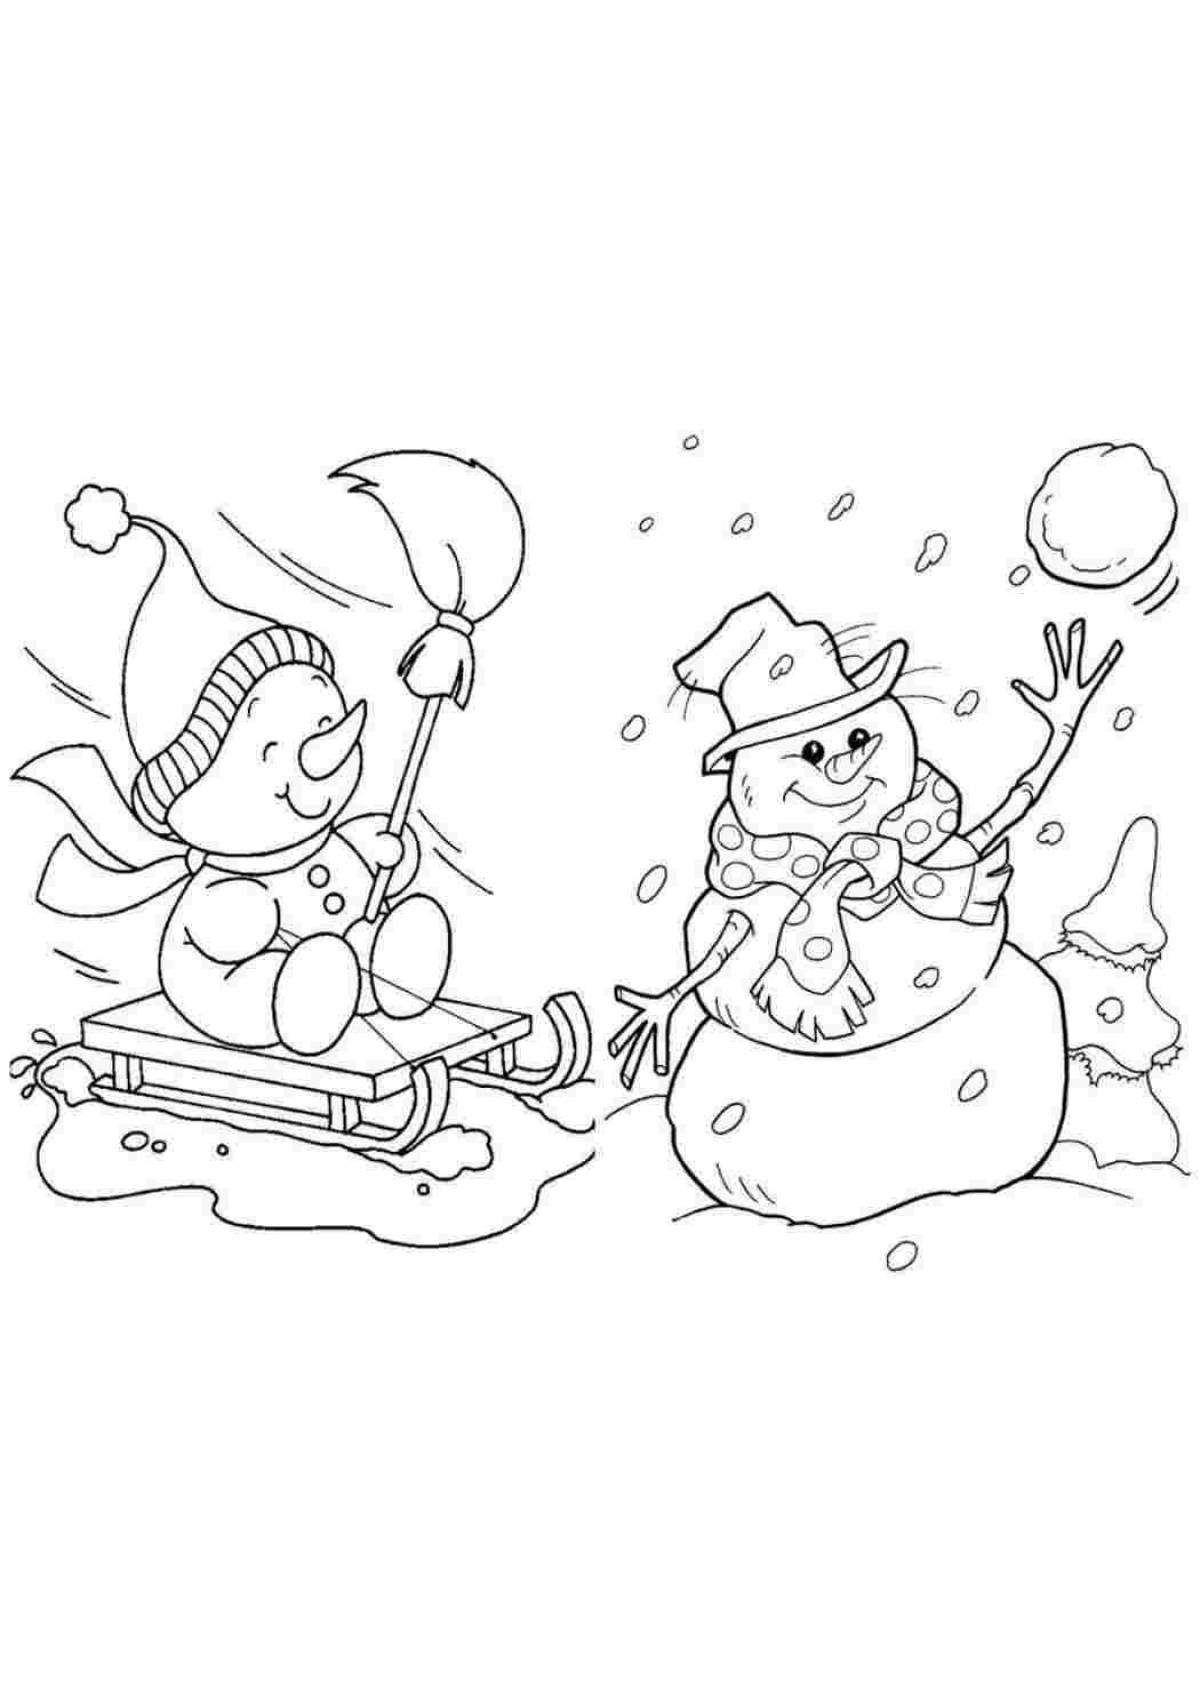 Sledding snowman #9